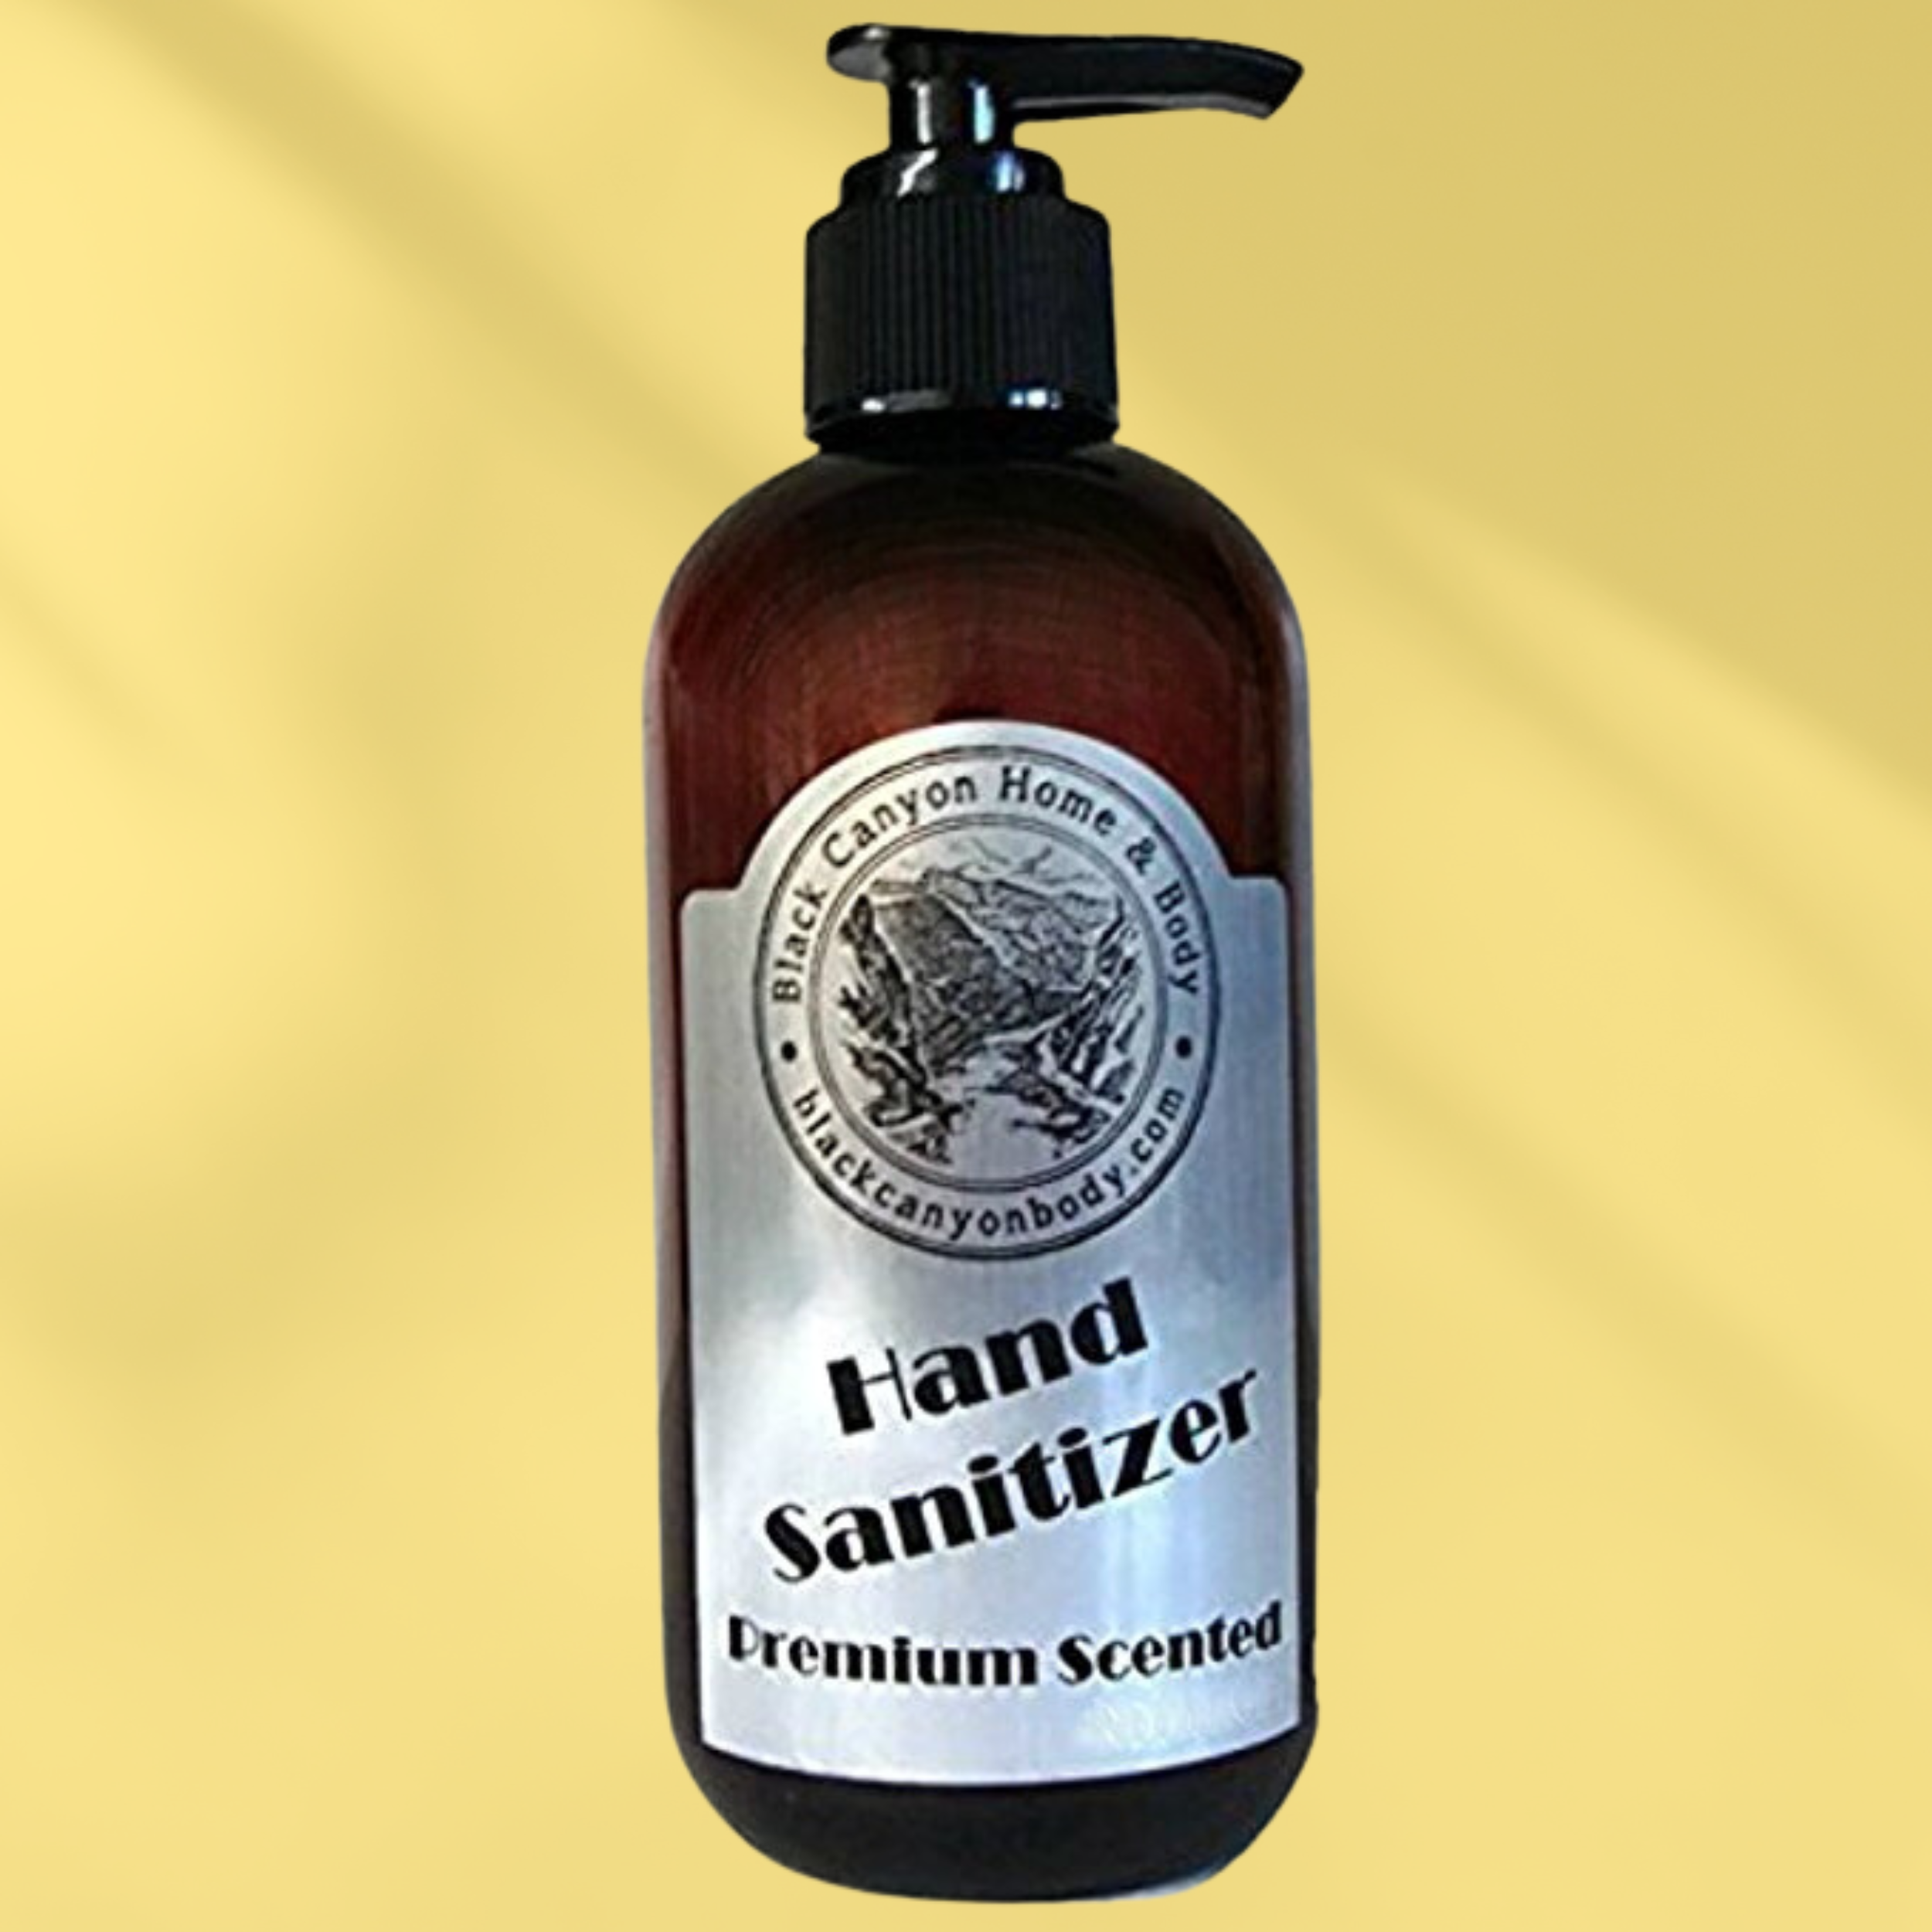 Black Canyon Black Vanilla & Vetiver Scented Hand Sanitizer Gel